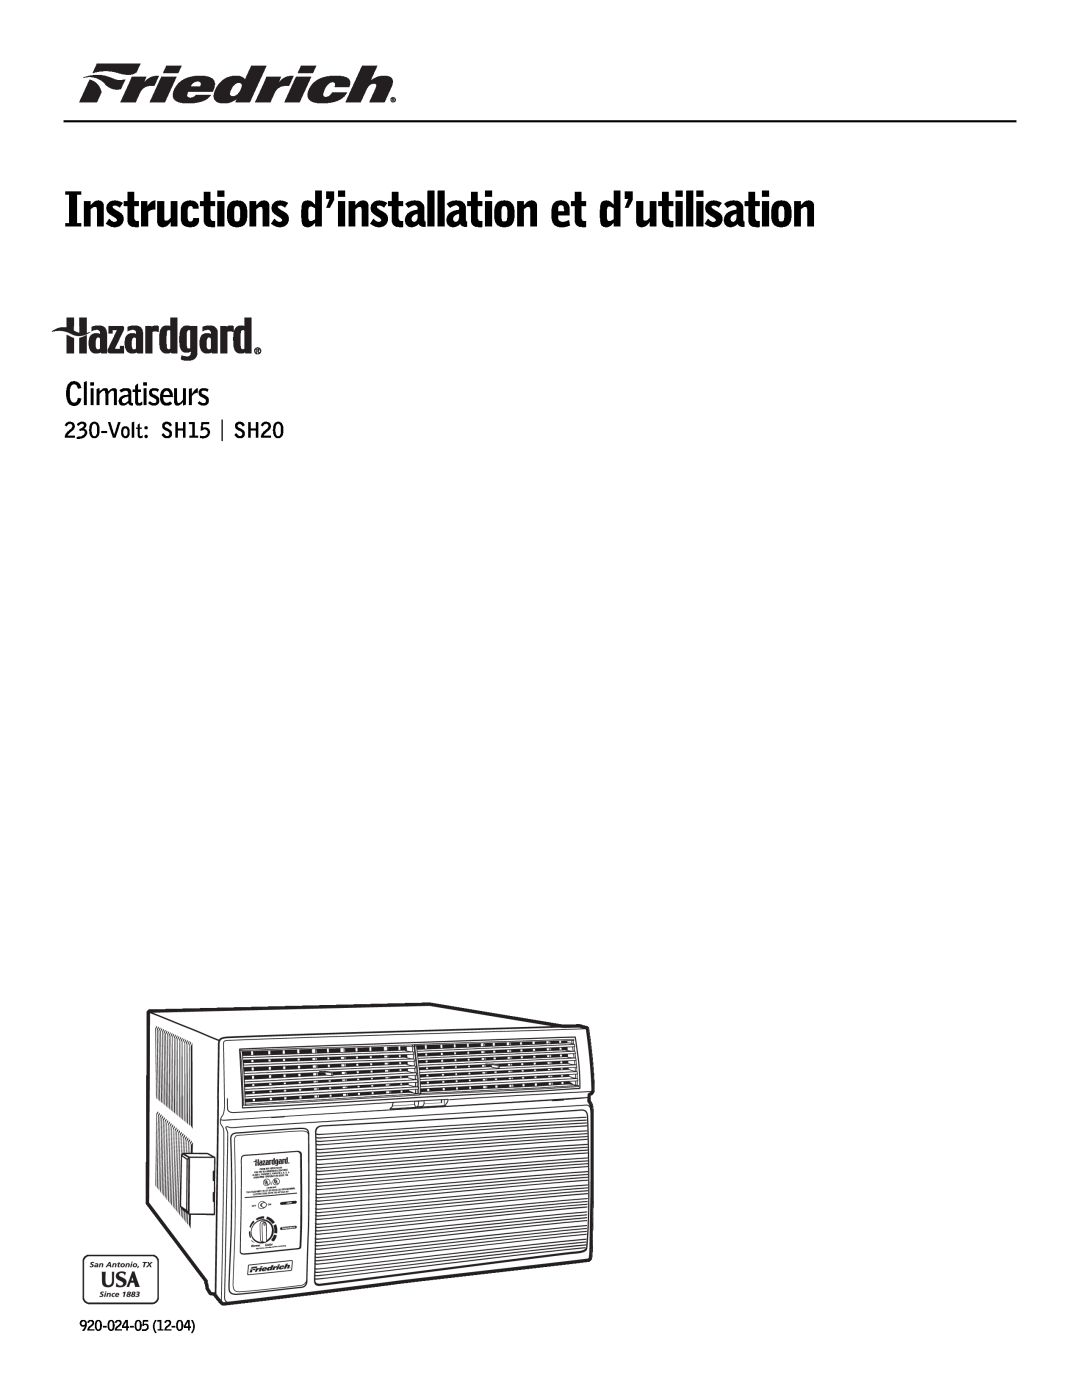 Friedrich operation manual Instructions d’installation et d’utilisation, Climatiseurs, Volt:SH15 | SH20, 920-024-05 